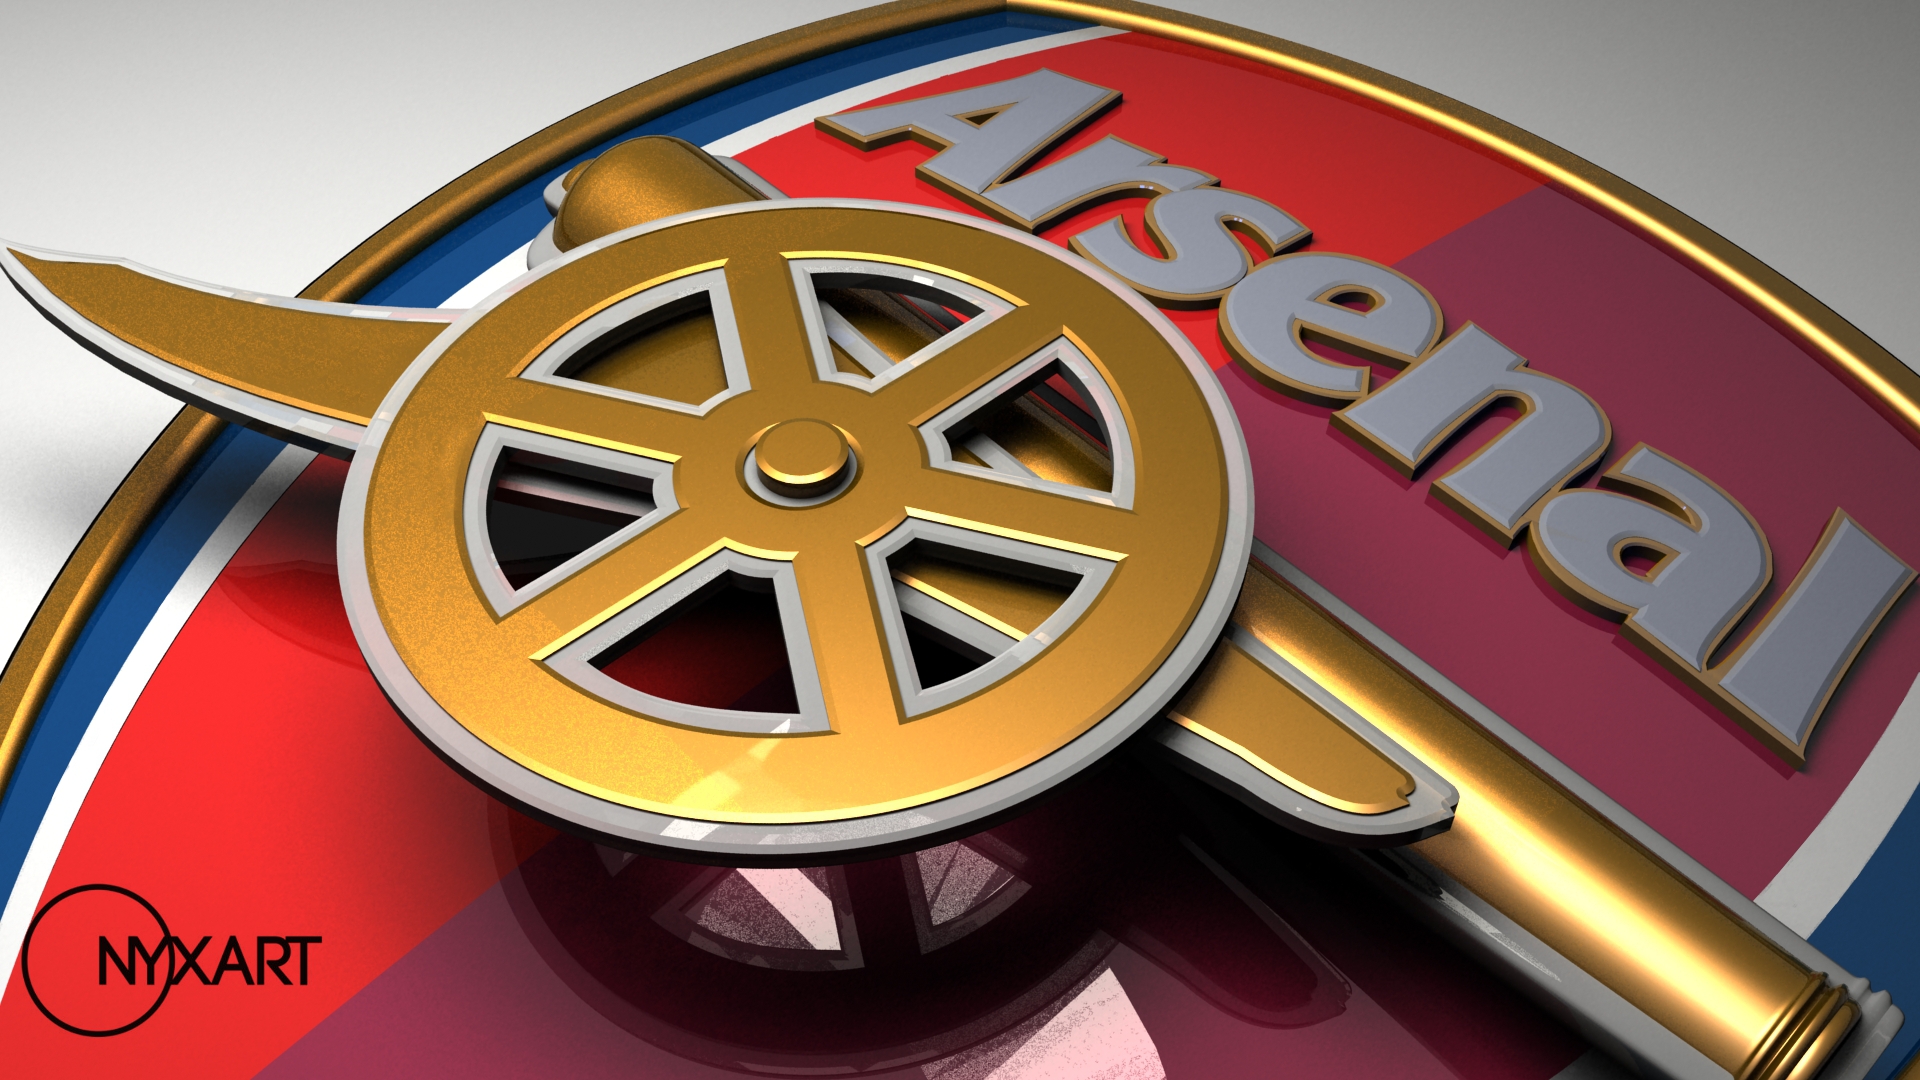 arsenal f c, sports, logo, soccer